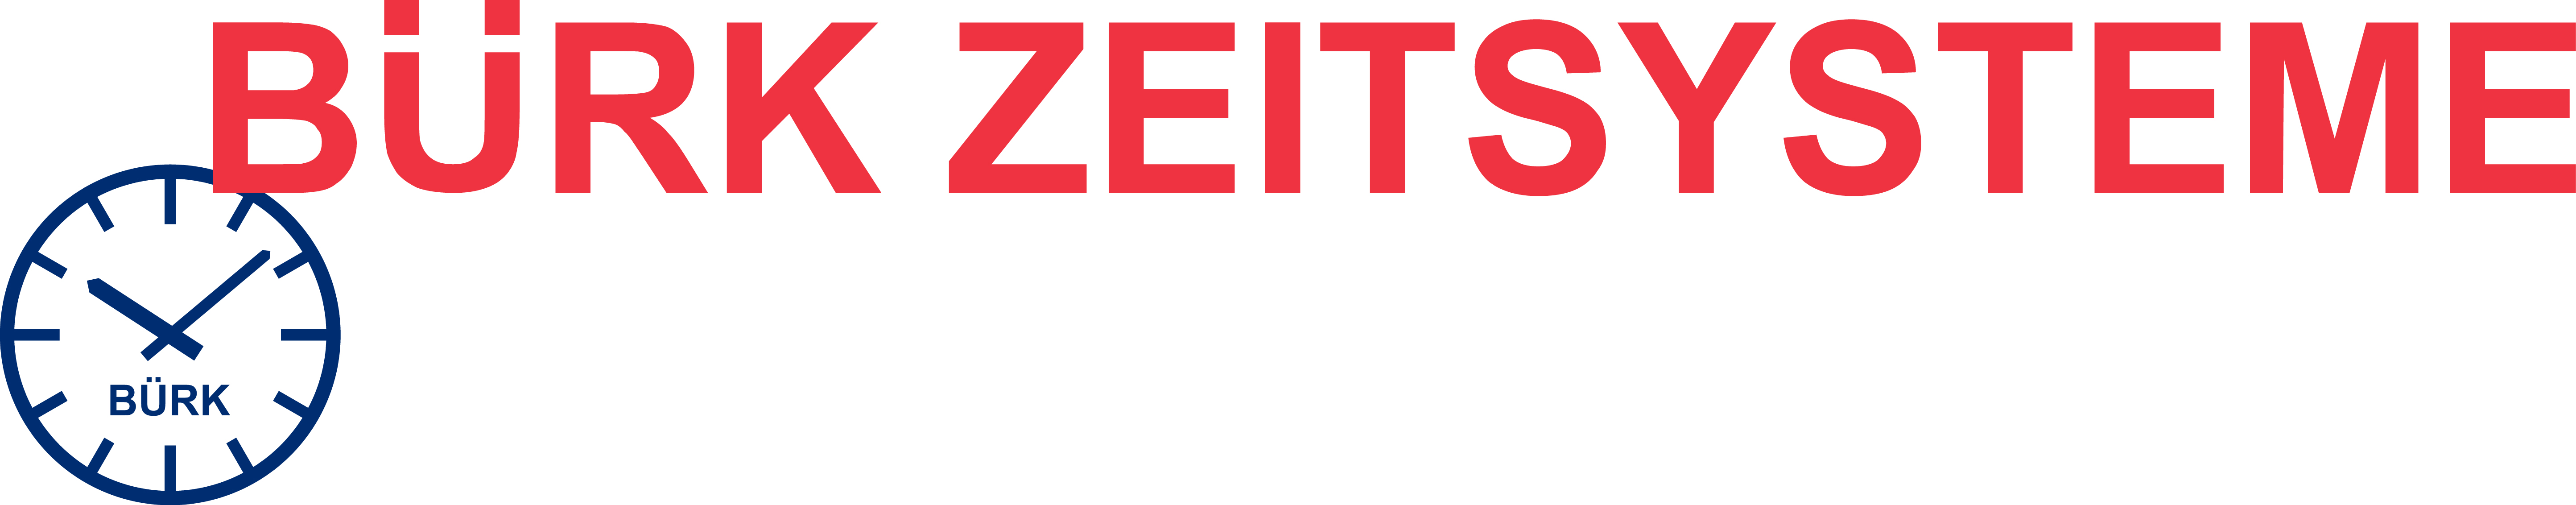 Bürk Zeitsysteme GmbH & Co.KG Logo